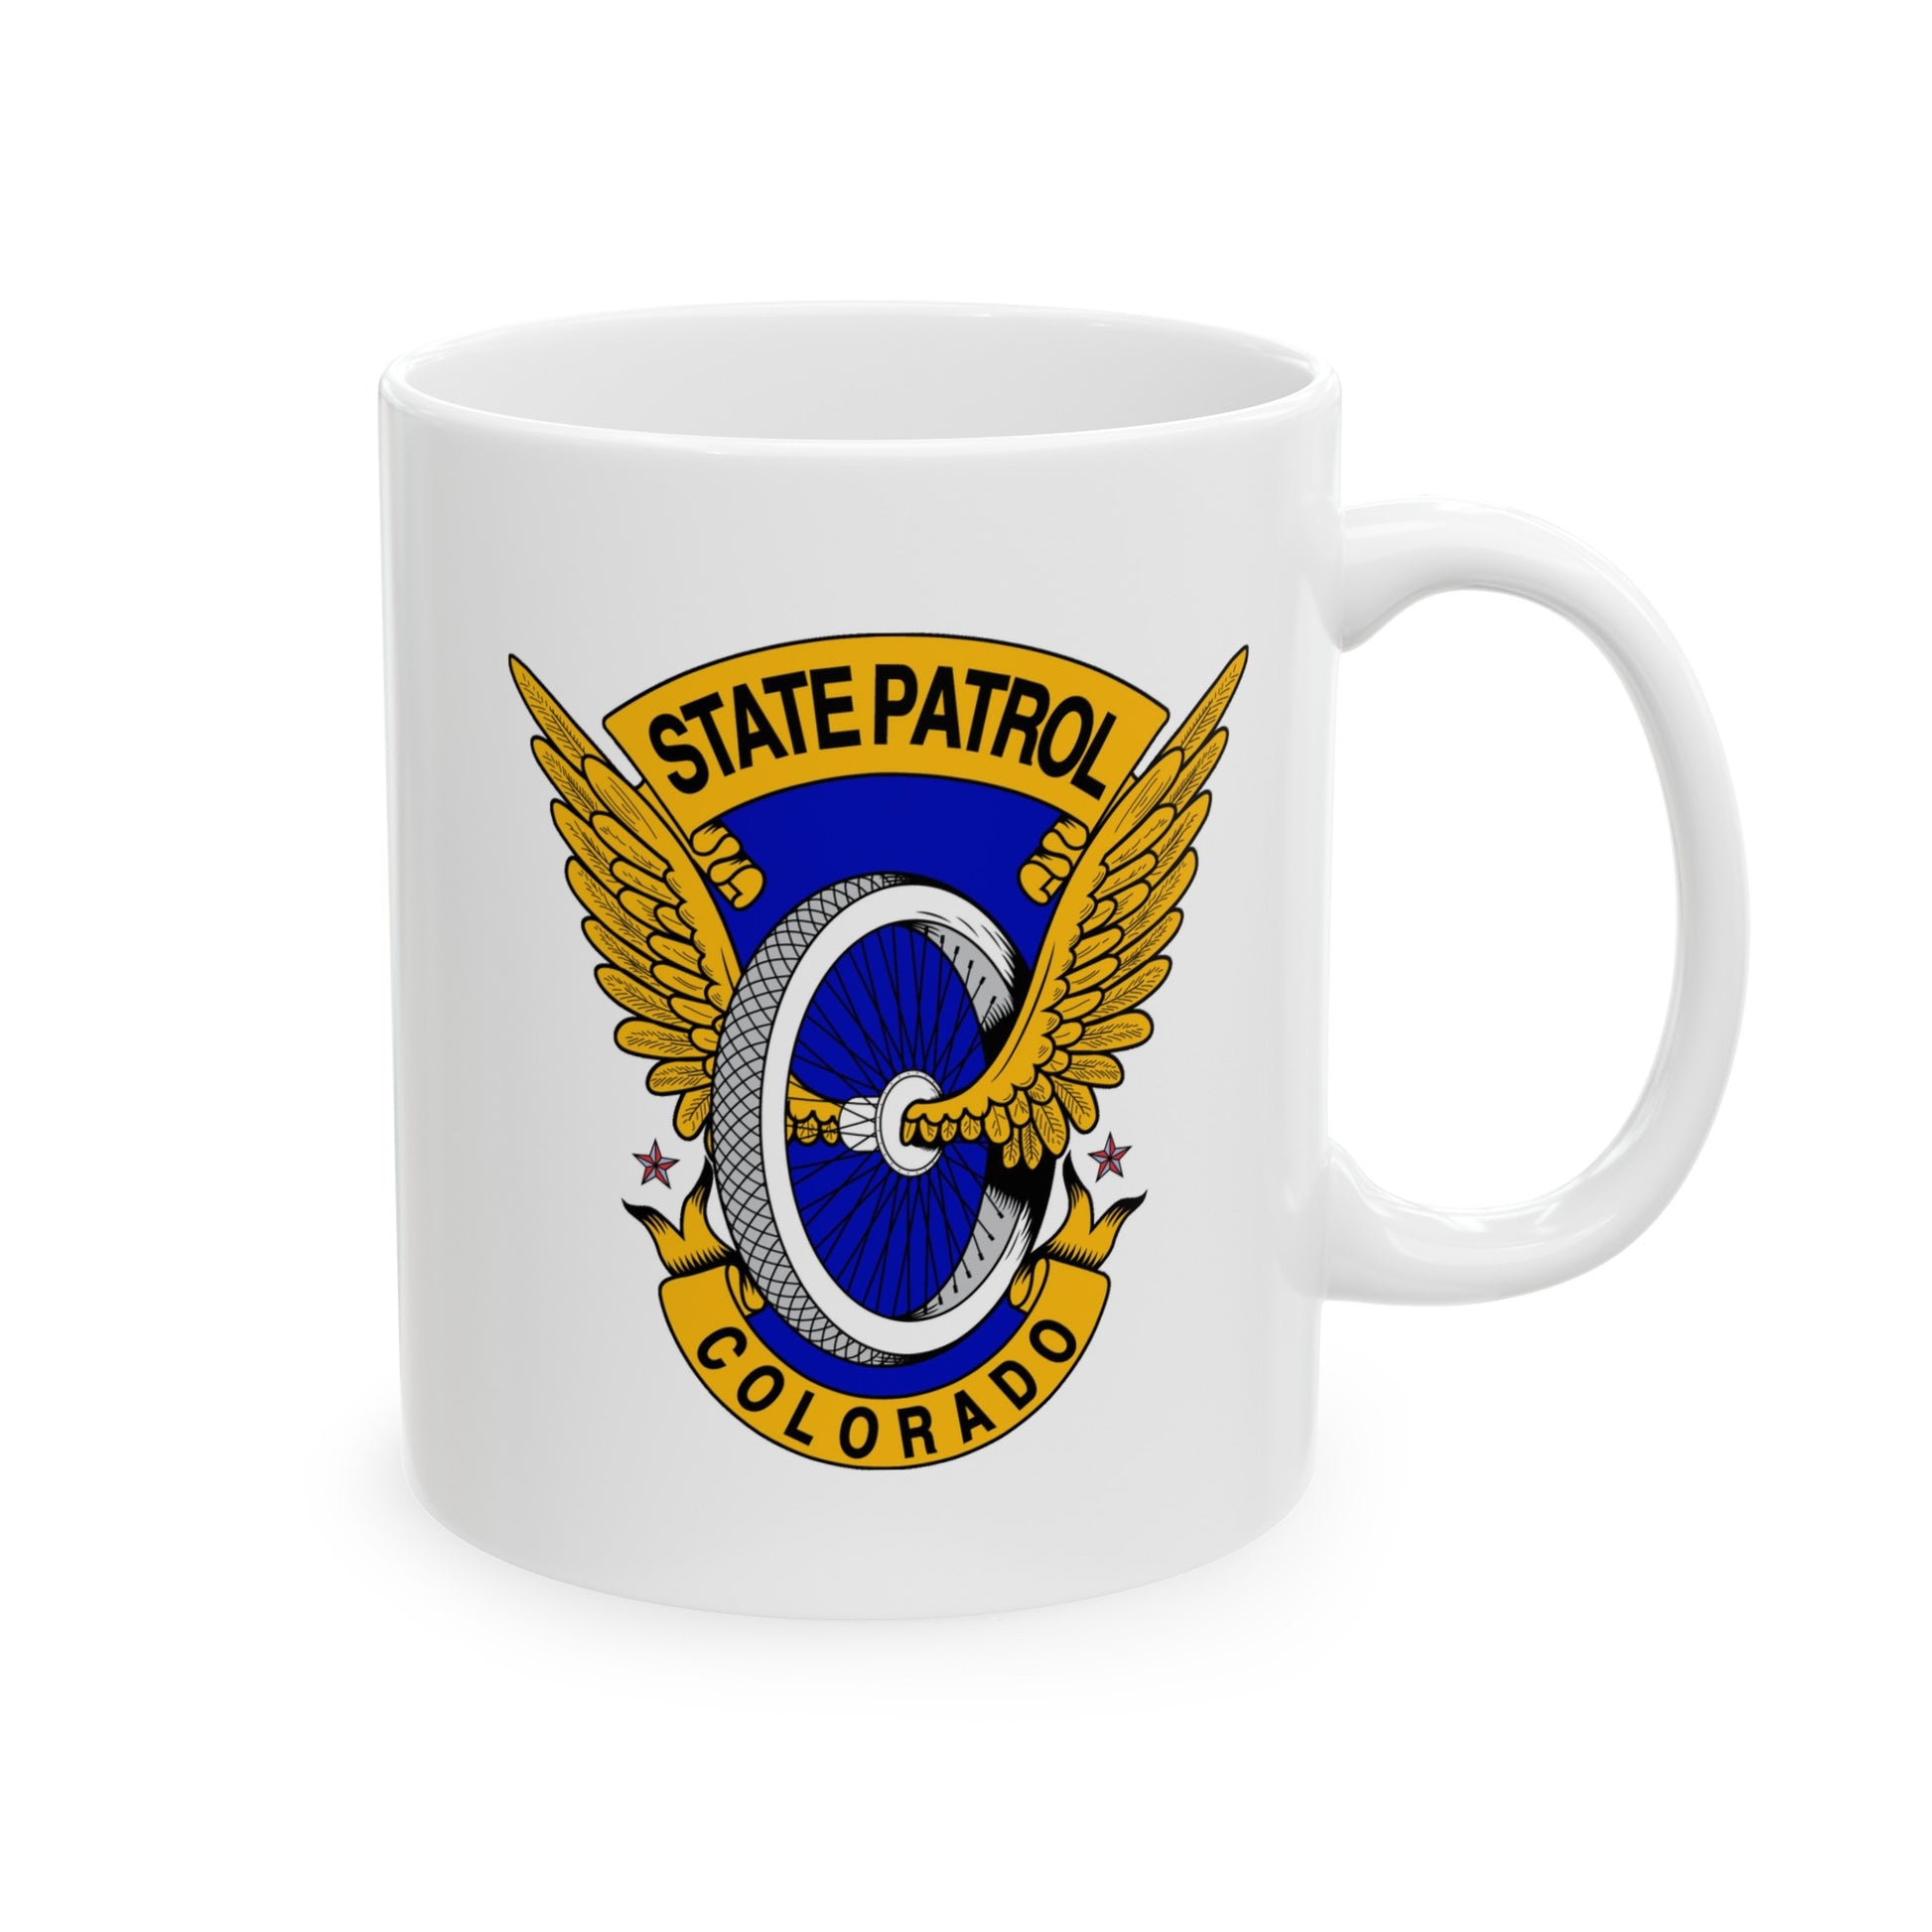 Colorado State Patrol Coffee Mug - Double Sided White Ceramic 11oz by TheGlassyLass.com